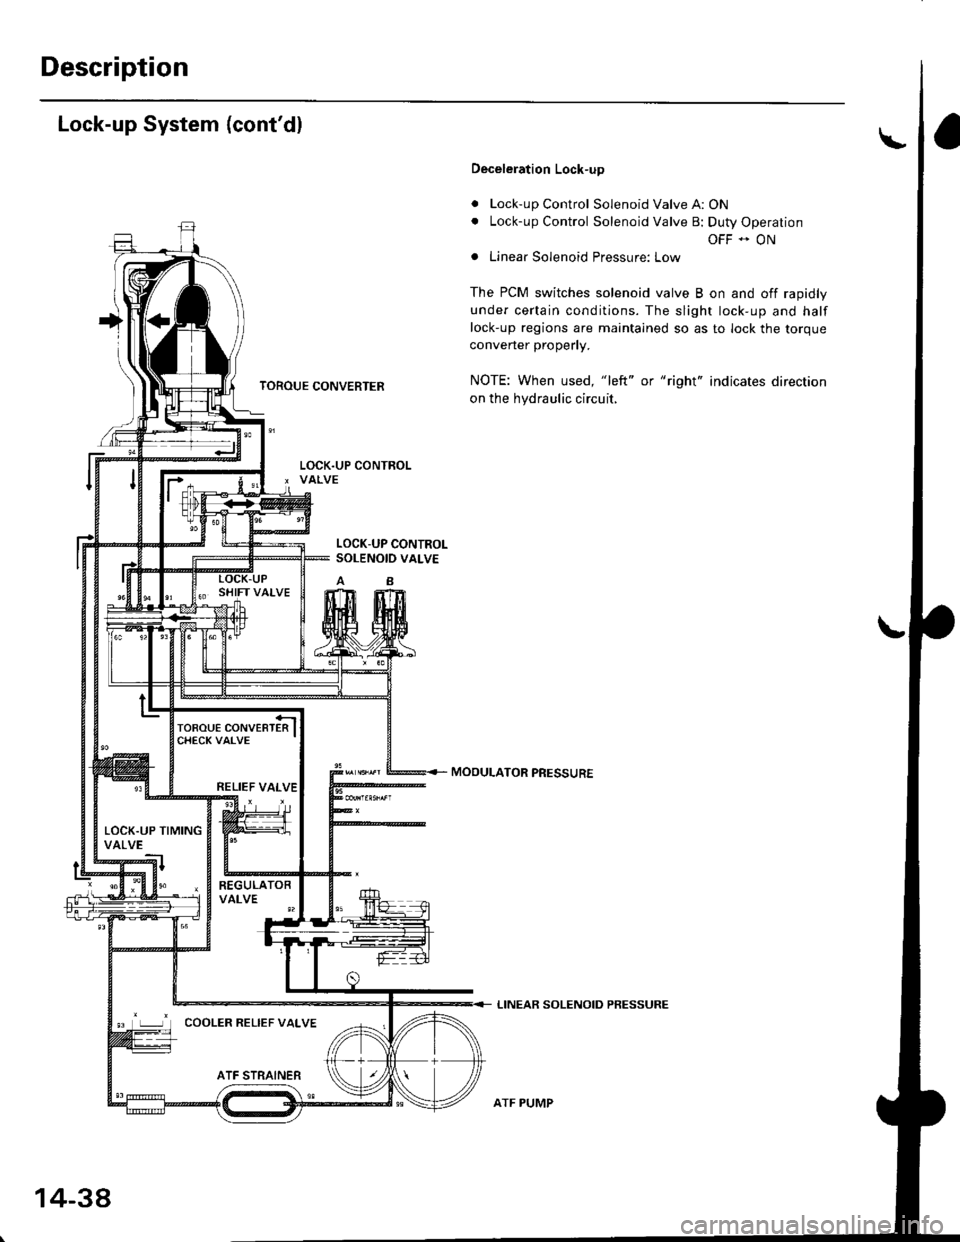 HONDA CIVIC 1997 6.G Workshop Manual Description
Lock-up System (contdl
TOROUE CONVERTER
Deceleration Lock-up
. Lock-up Control Solenoid Valve A: ON. Lock-up Control Solenoid Valve B: Duty Operation
OFF - ONa Linear Solenoid Pressure: L